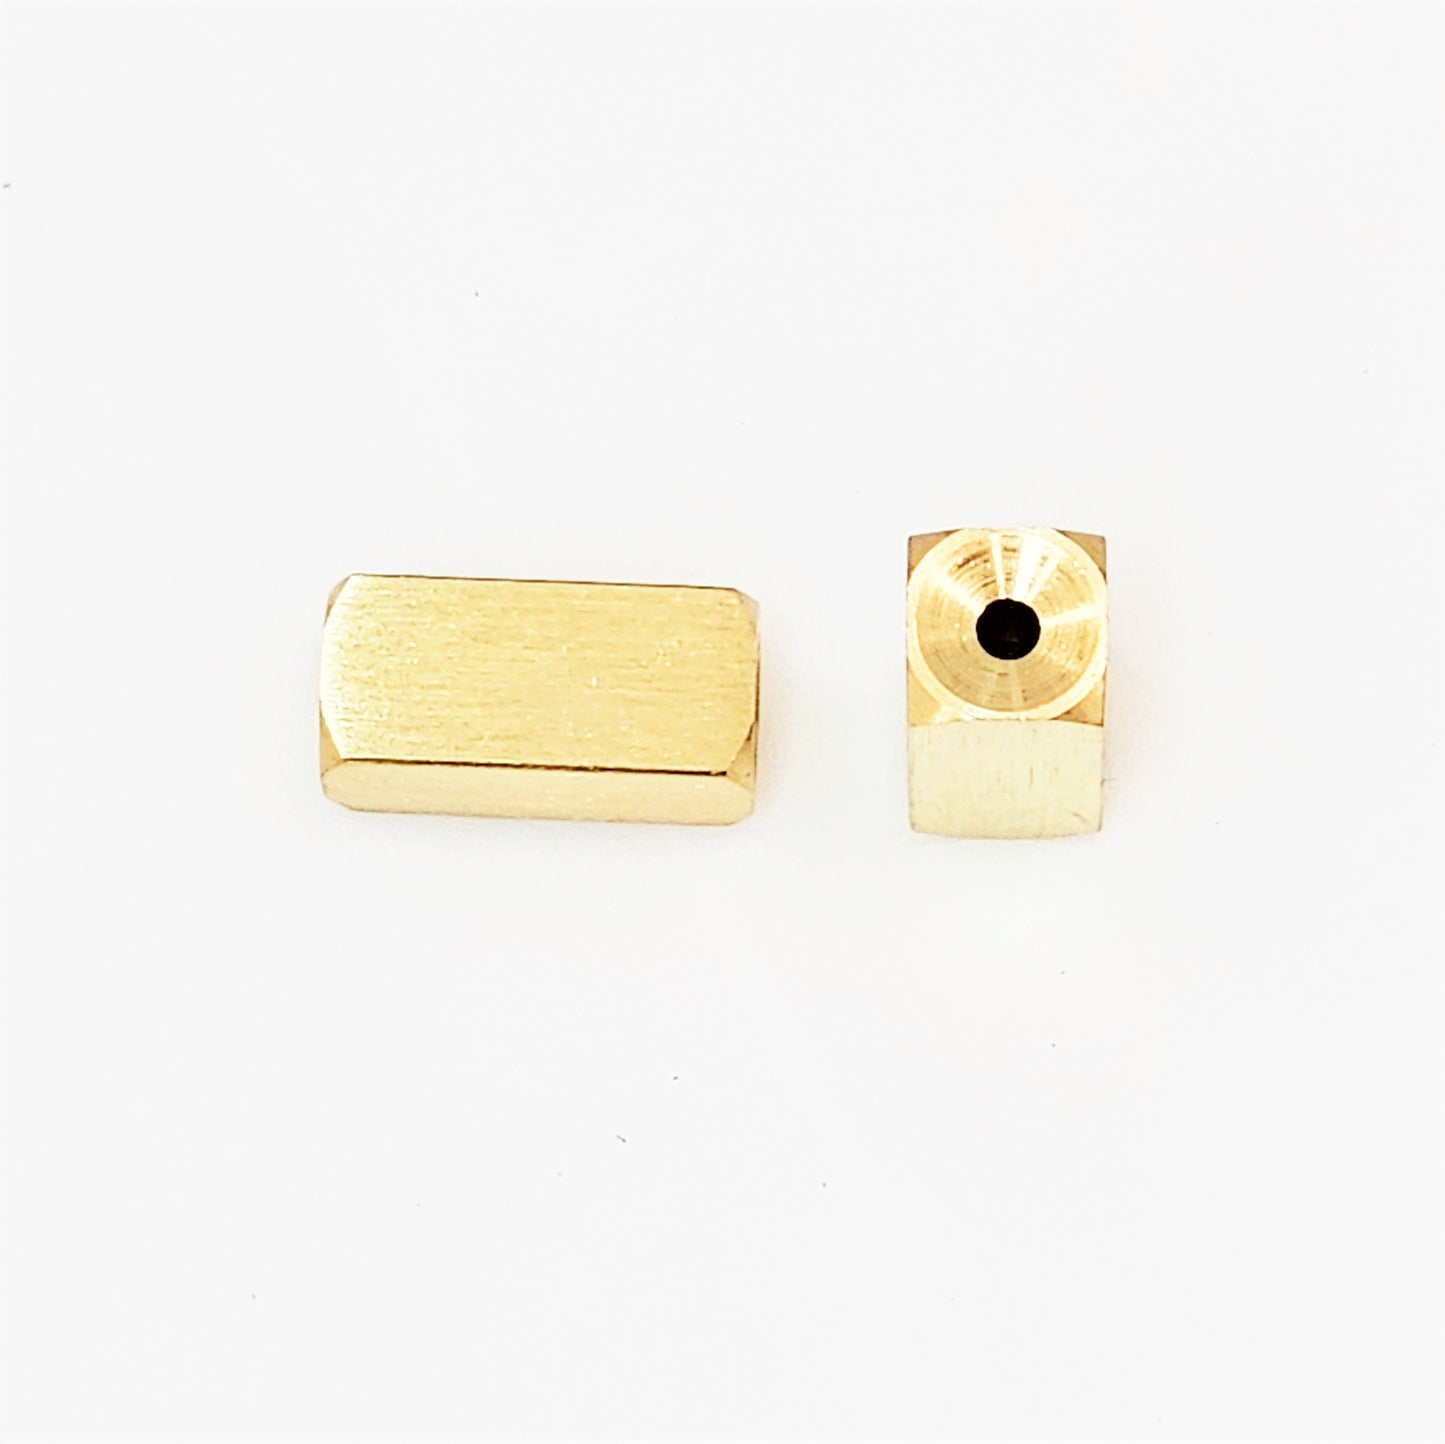 Gold Square Bar - 6mm x 13mm